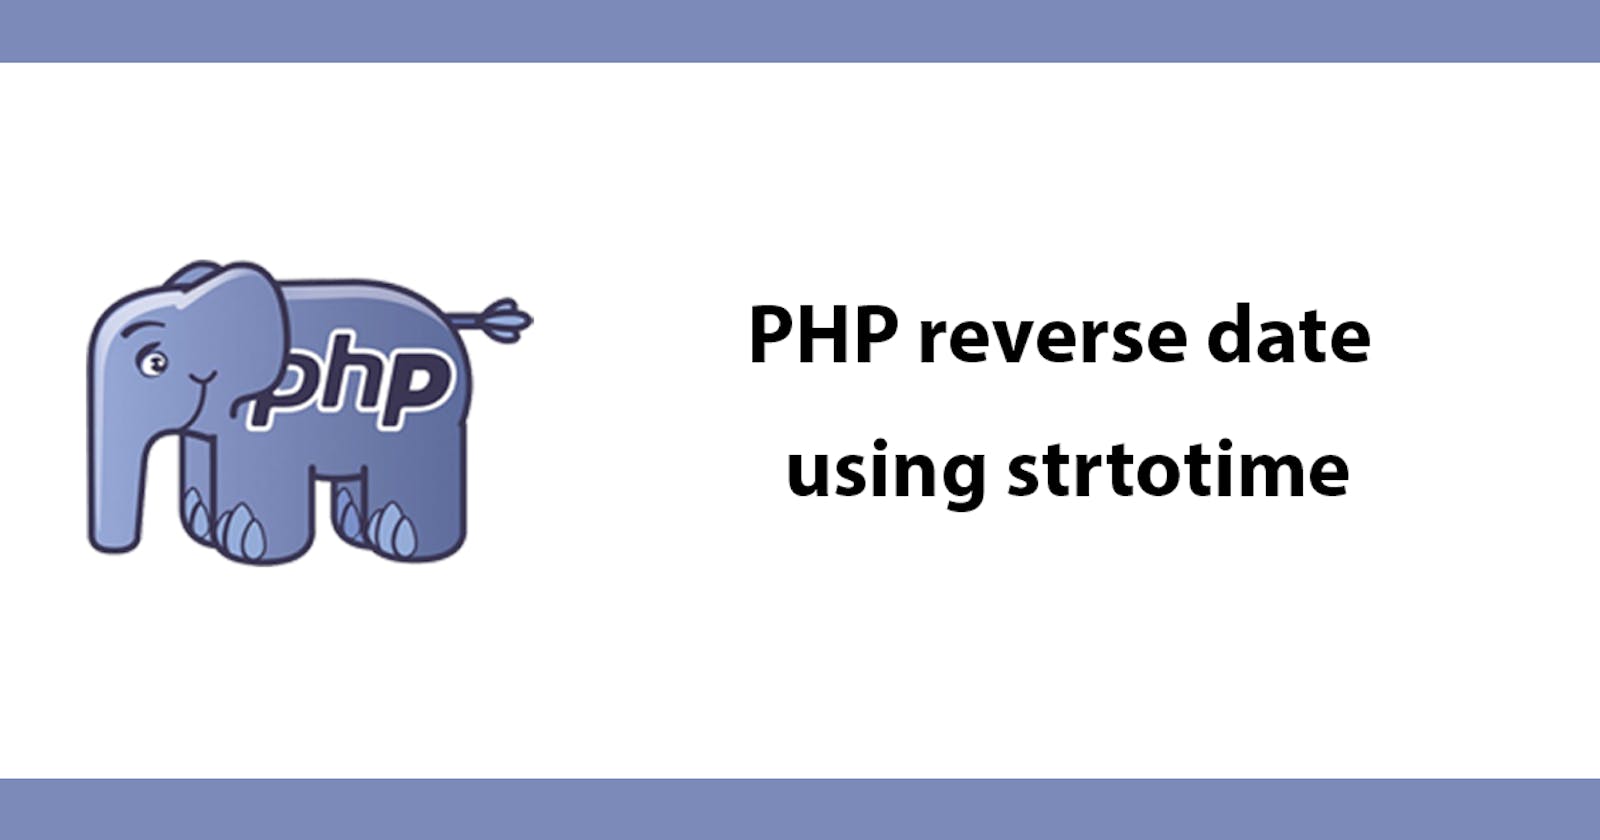 PHP reverse date using strtotime